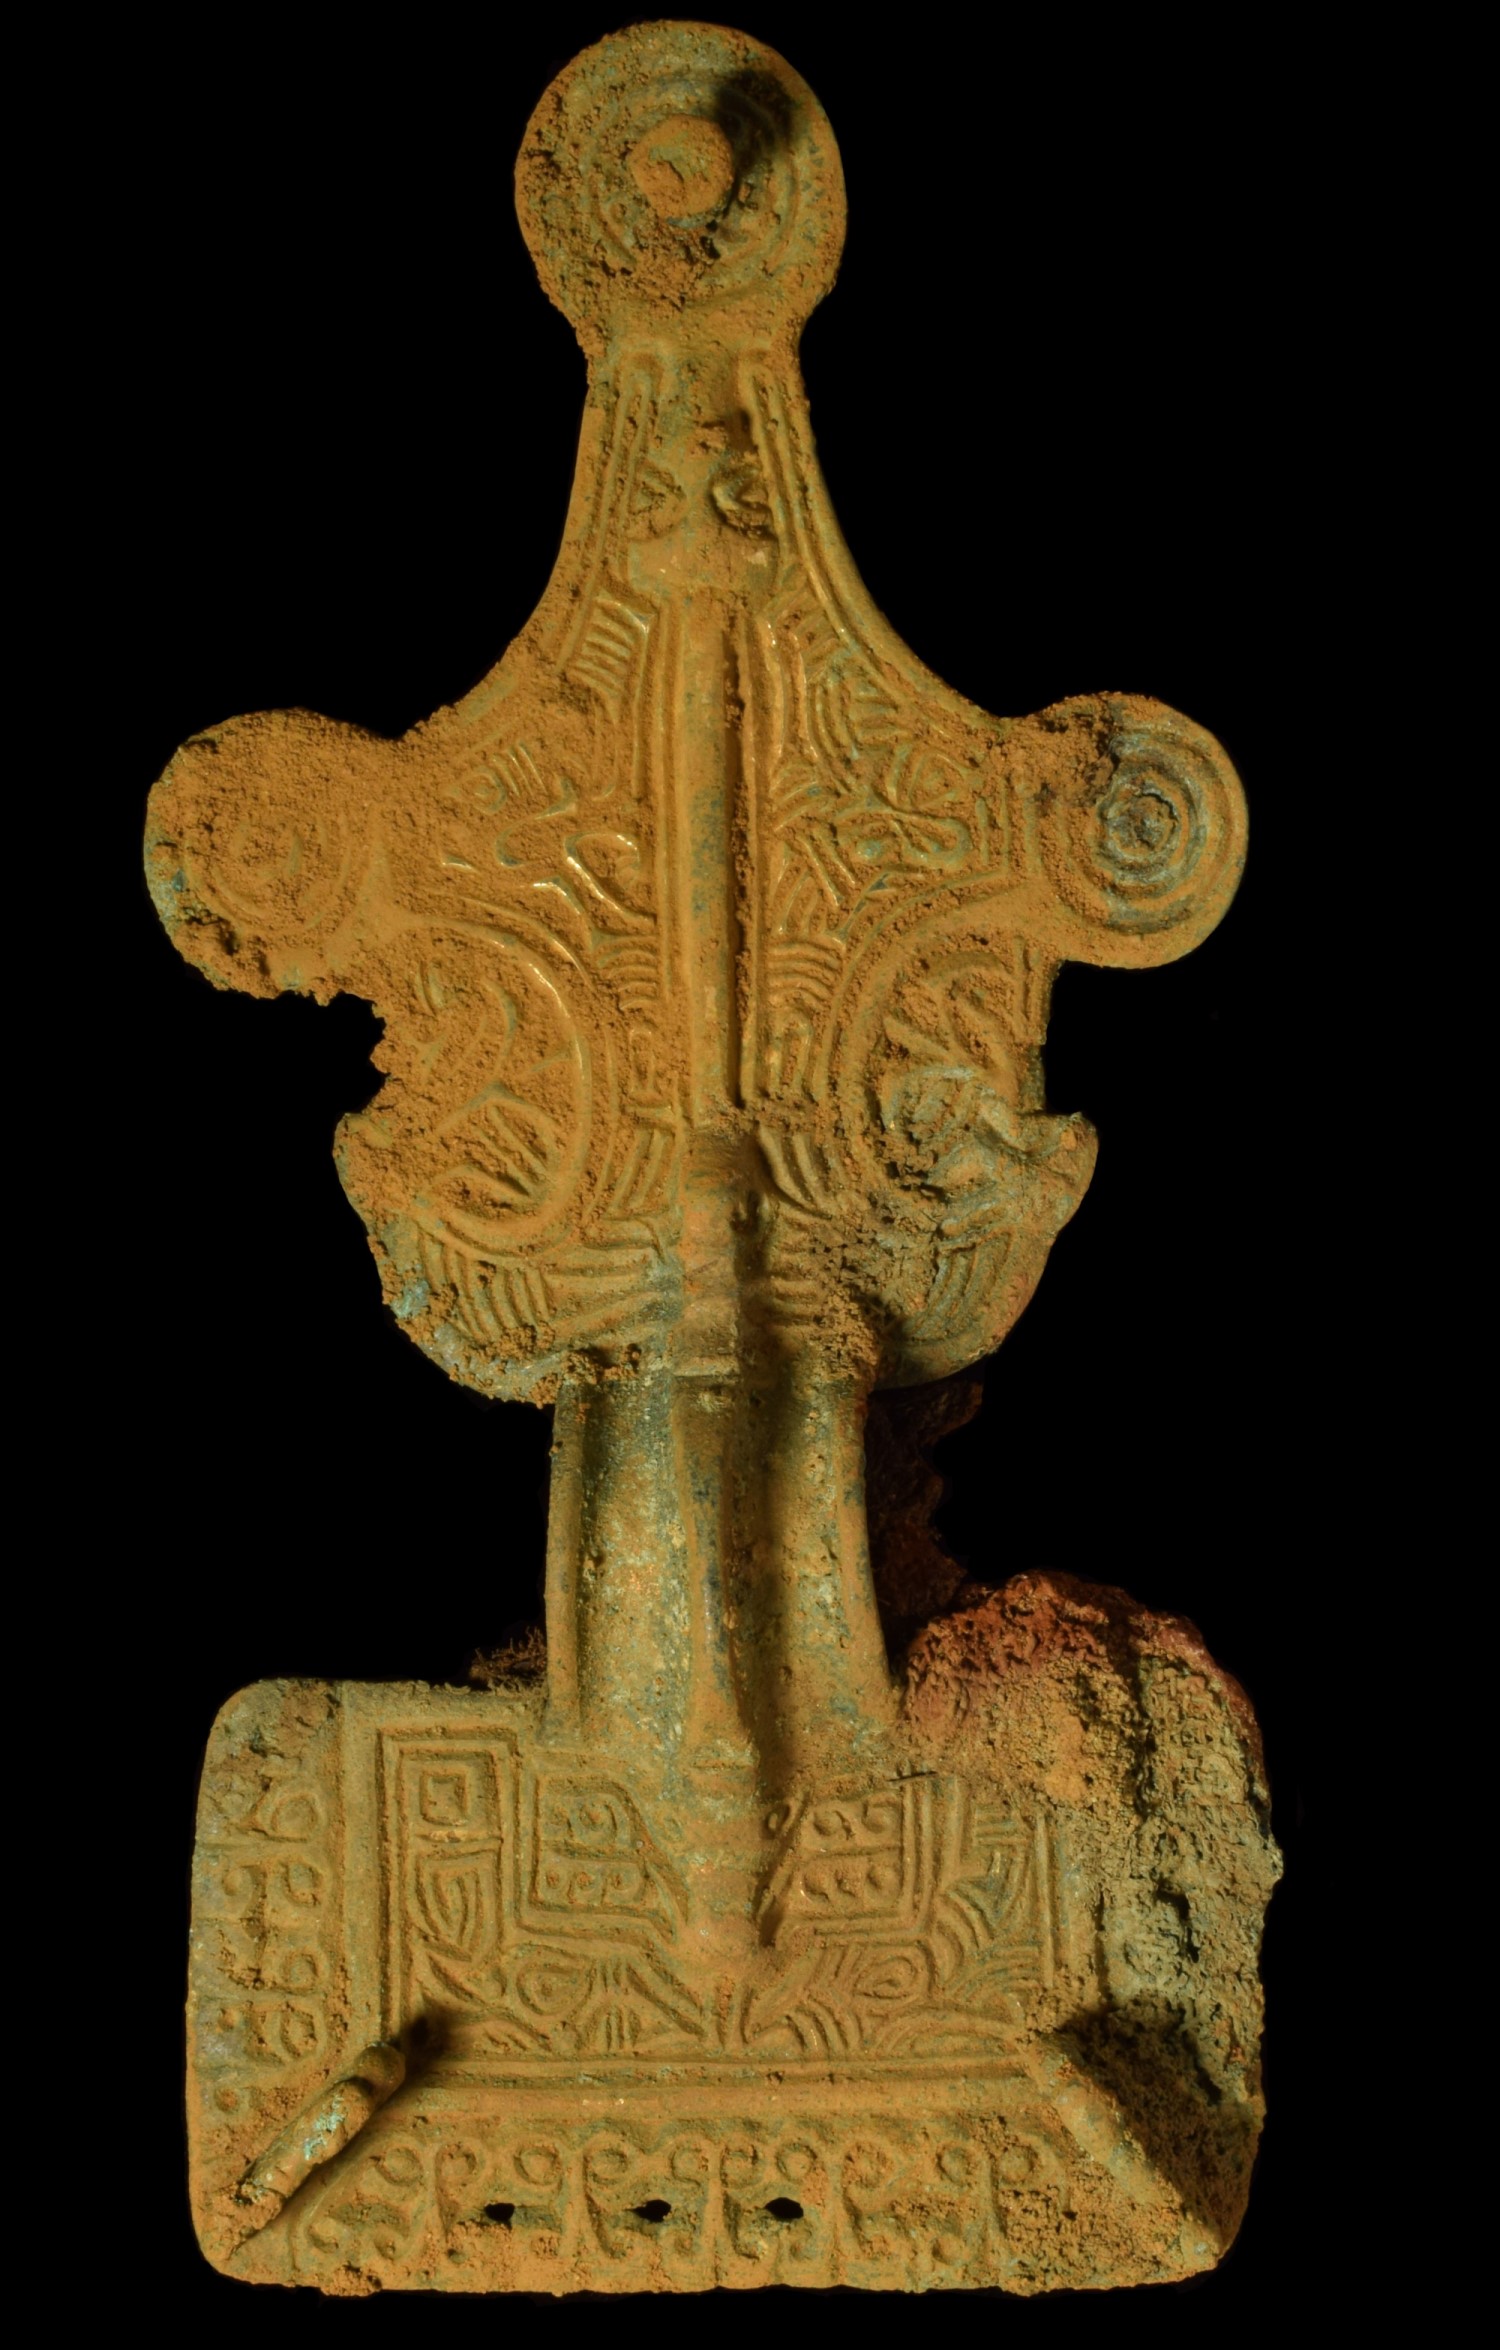 Saxon decorated brooch